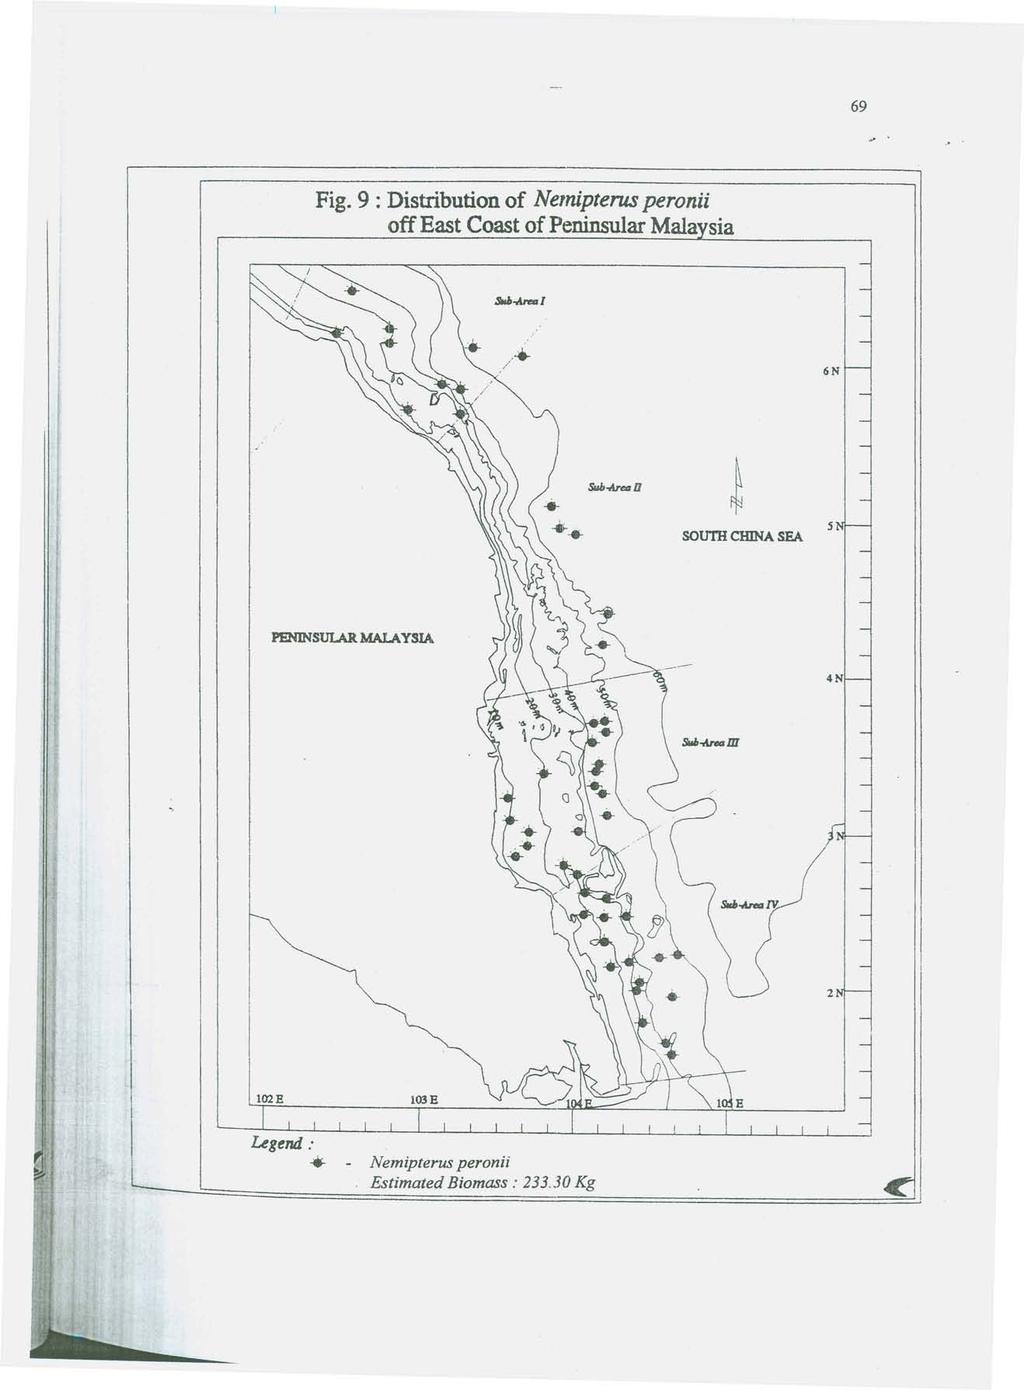 Fig. 9 : Distribution of Nemipterus peronii off East Coast of